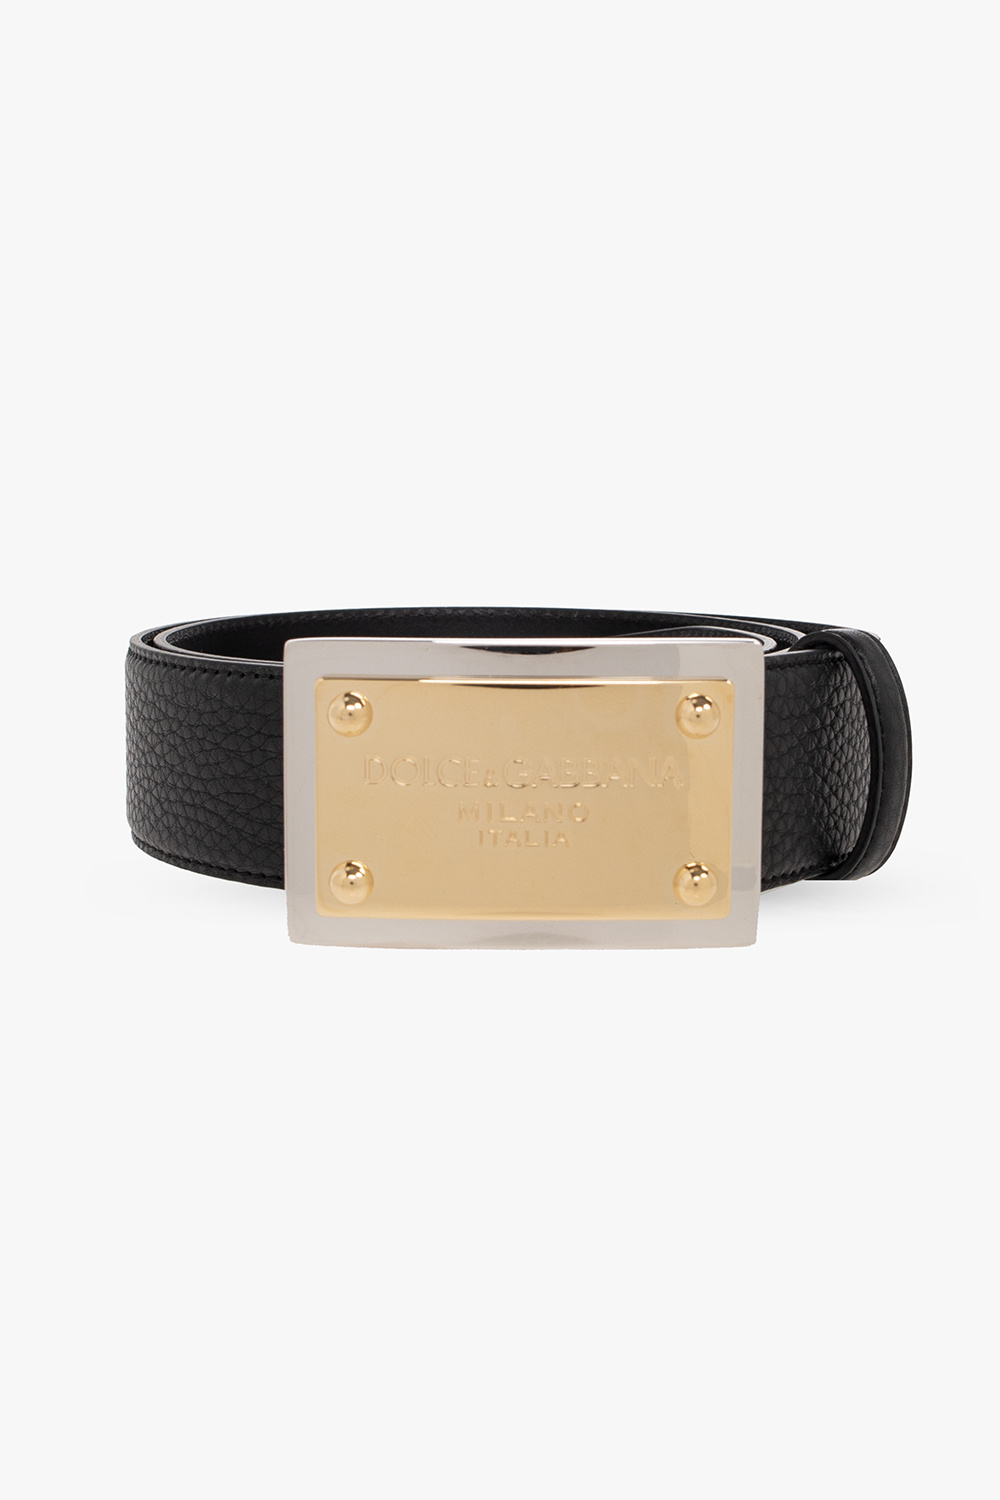 Dolce & Gabbana Tweed Leather belt